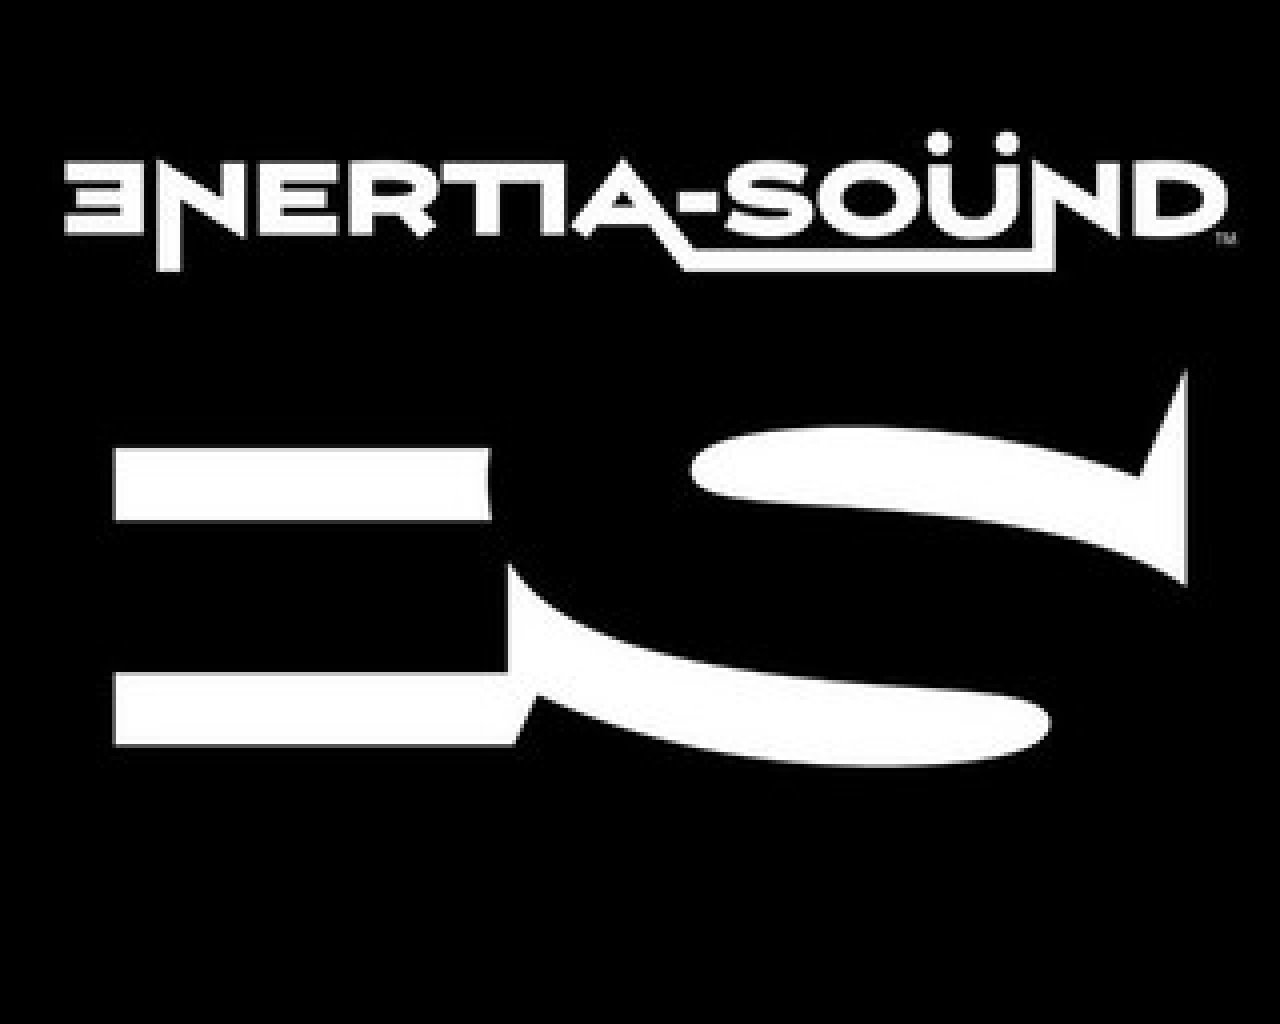 Enertia-Sound